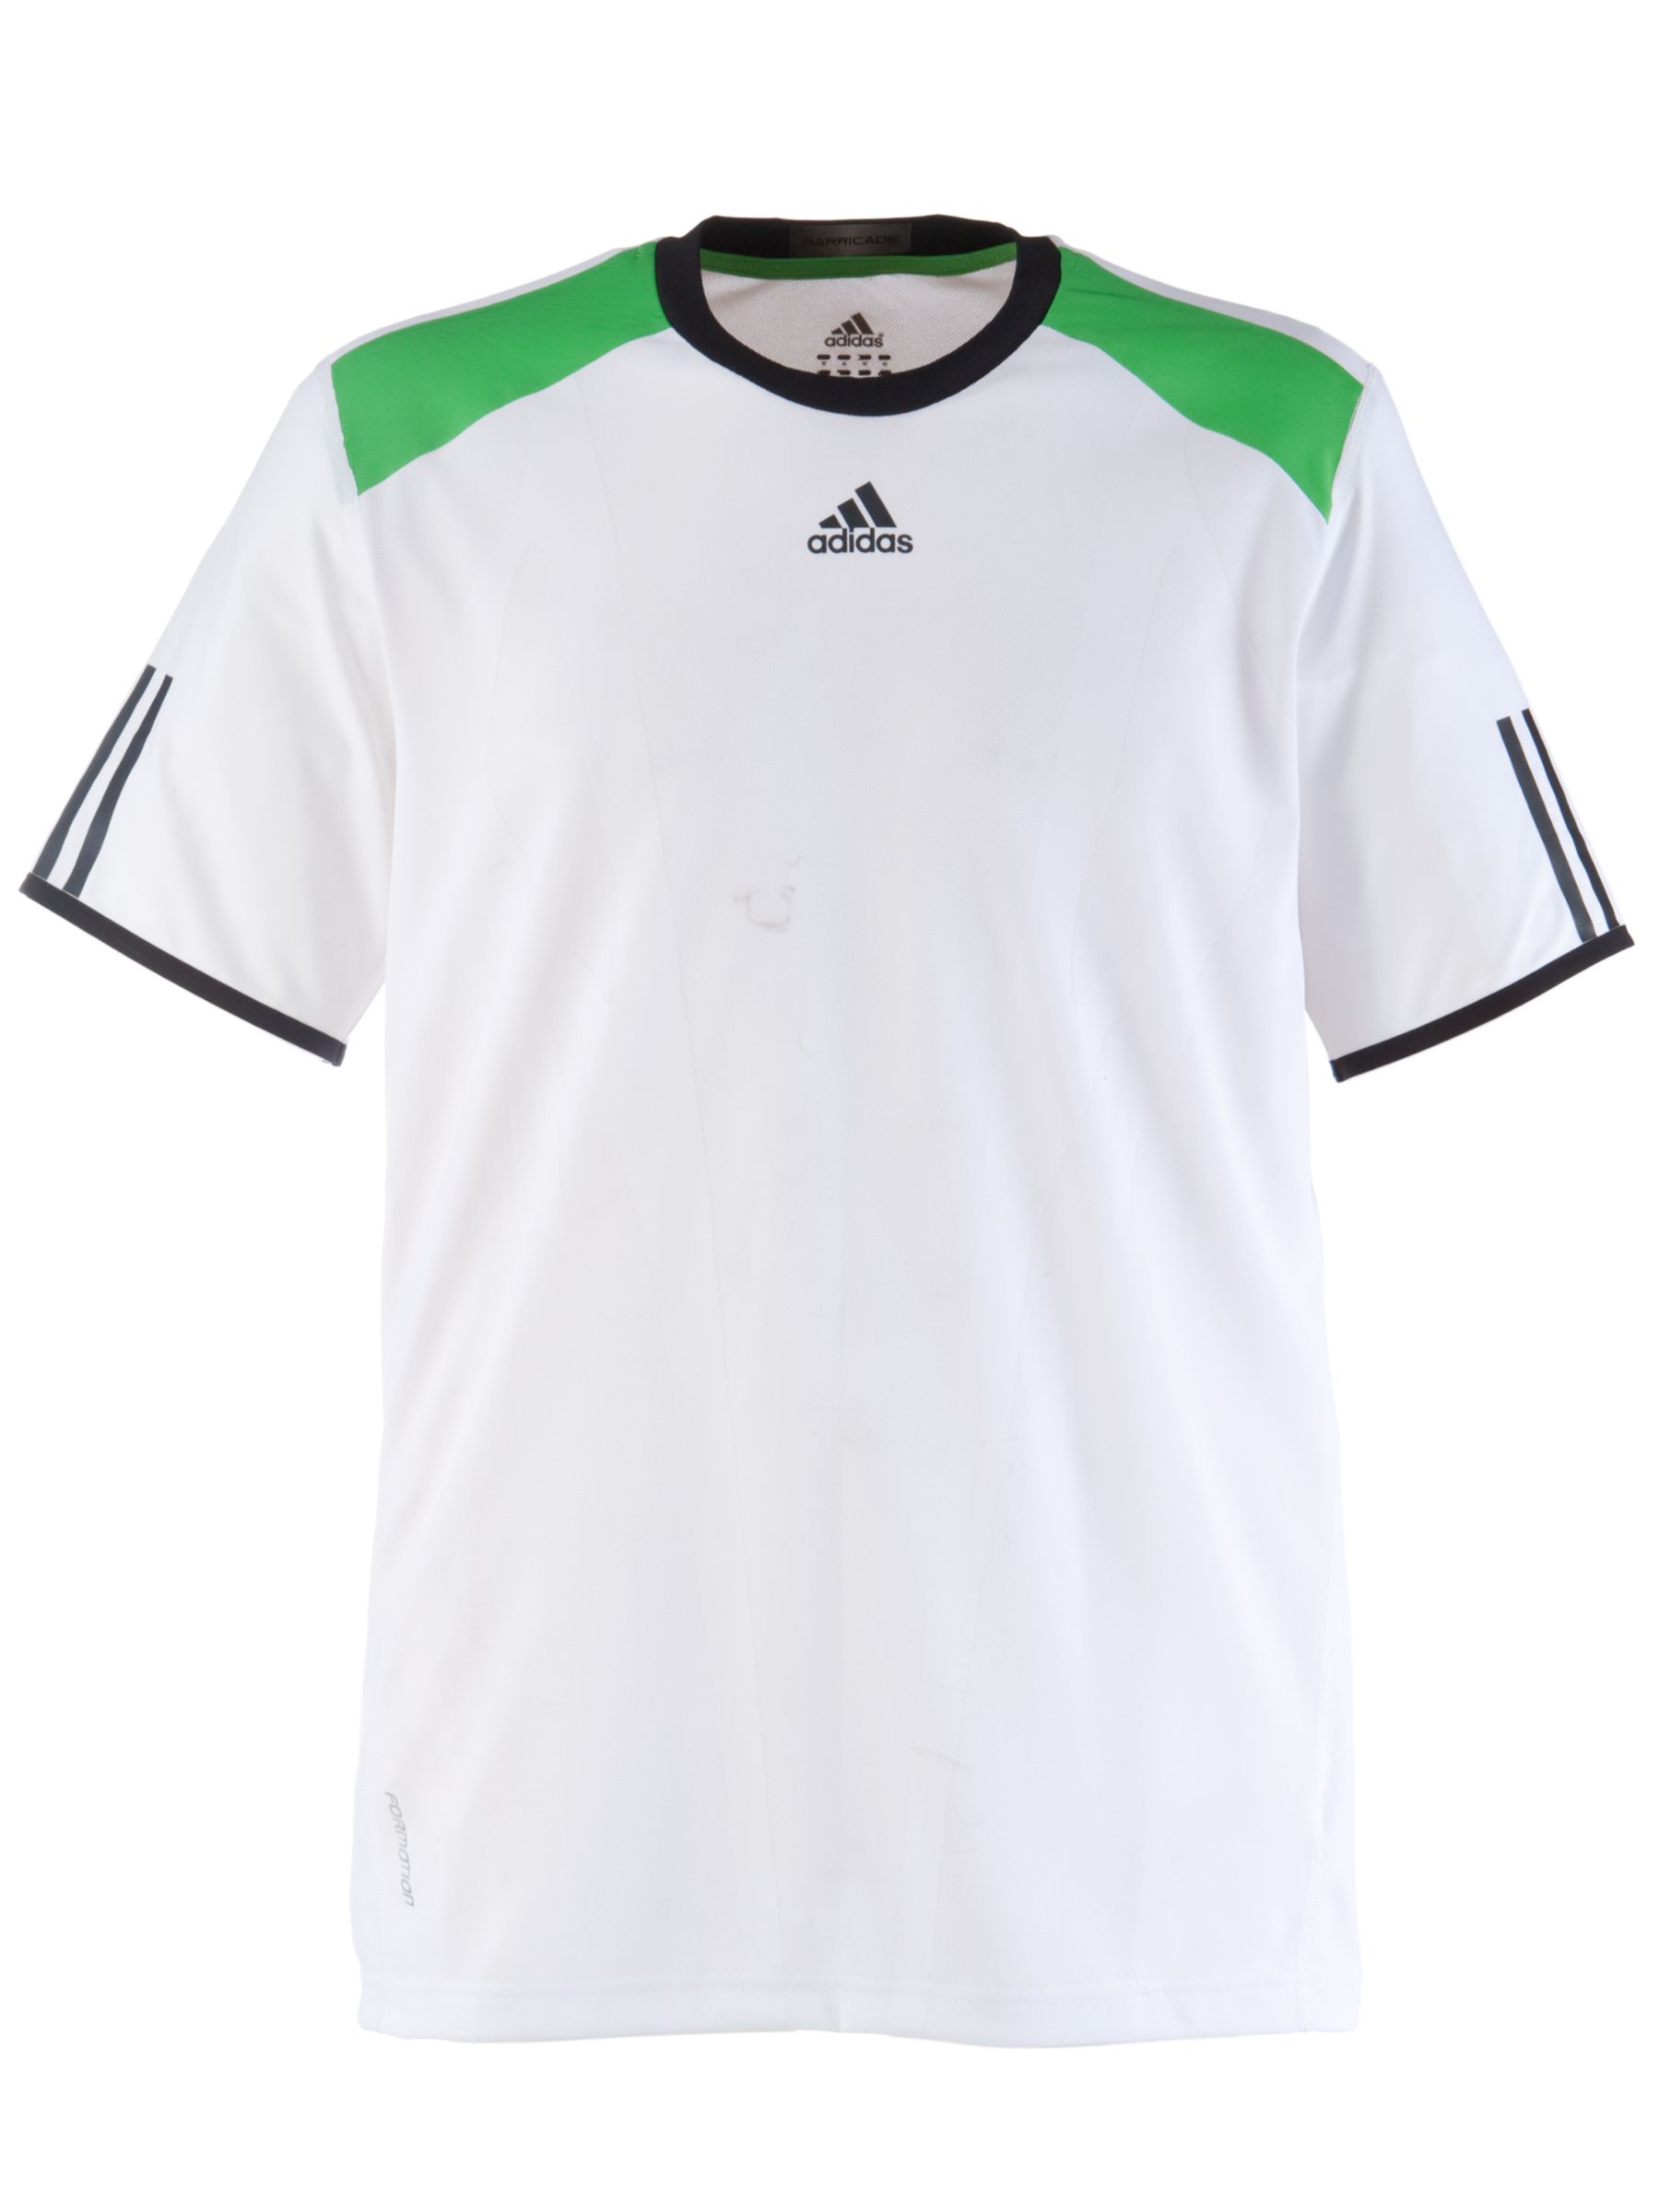 Adidas Barricade Short Sleeve T-Shirt, White/green